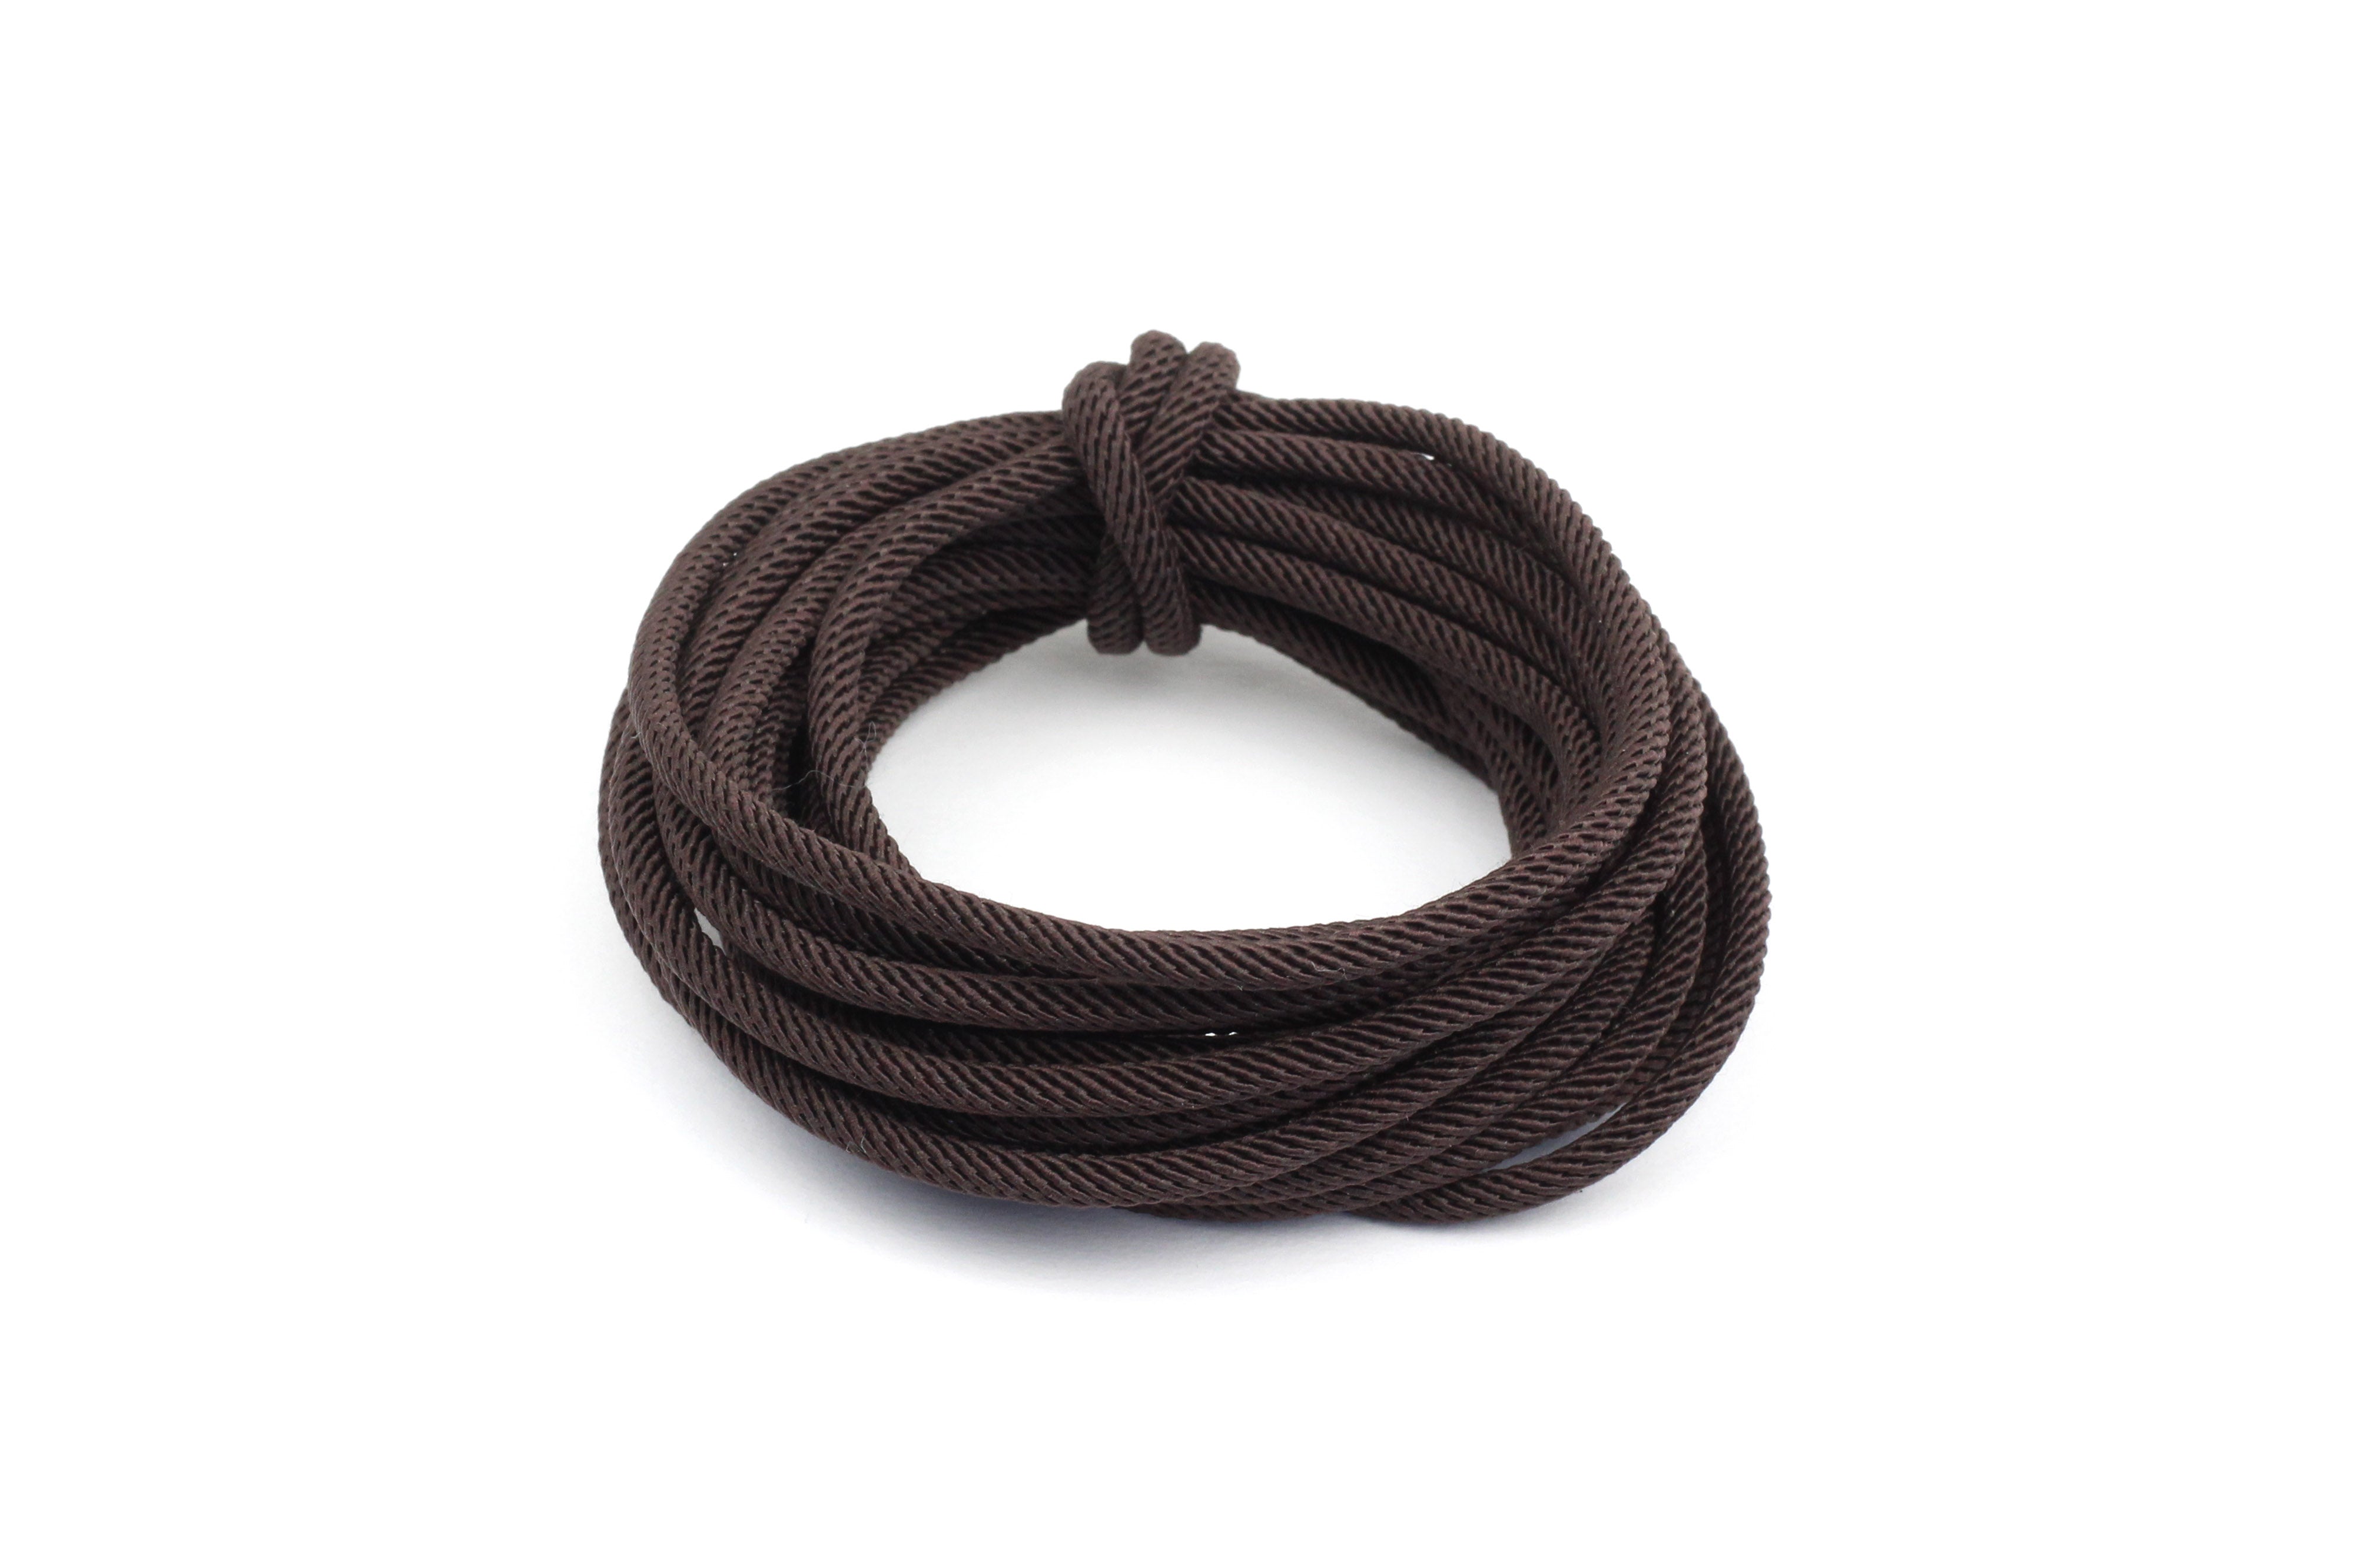 Cotton 'Rope' Cord in Dark Brown - 3mm (3 metres) – KerrieBerrie Beads &  Jewellery